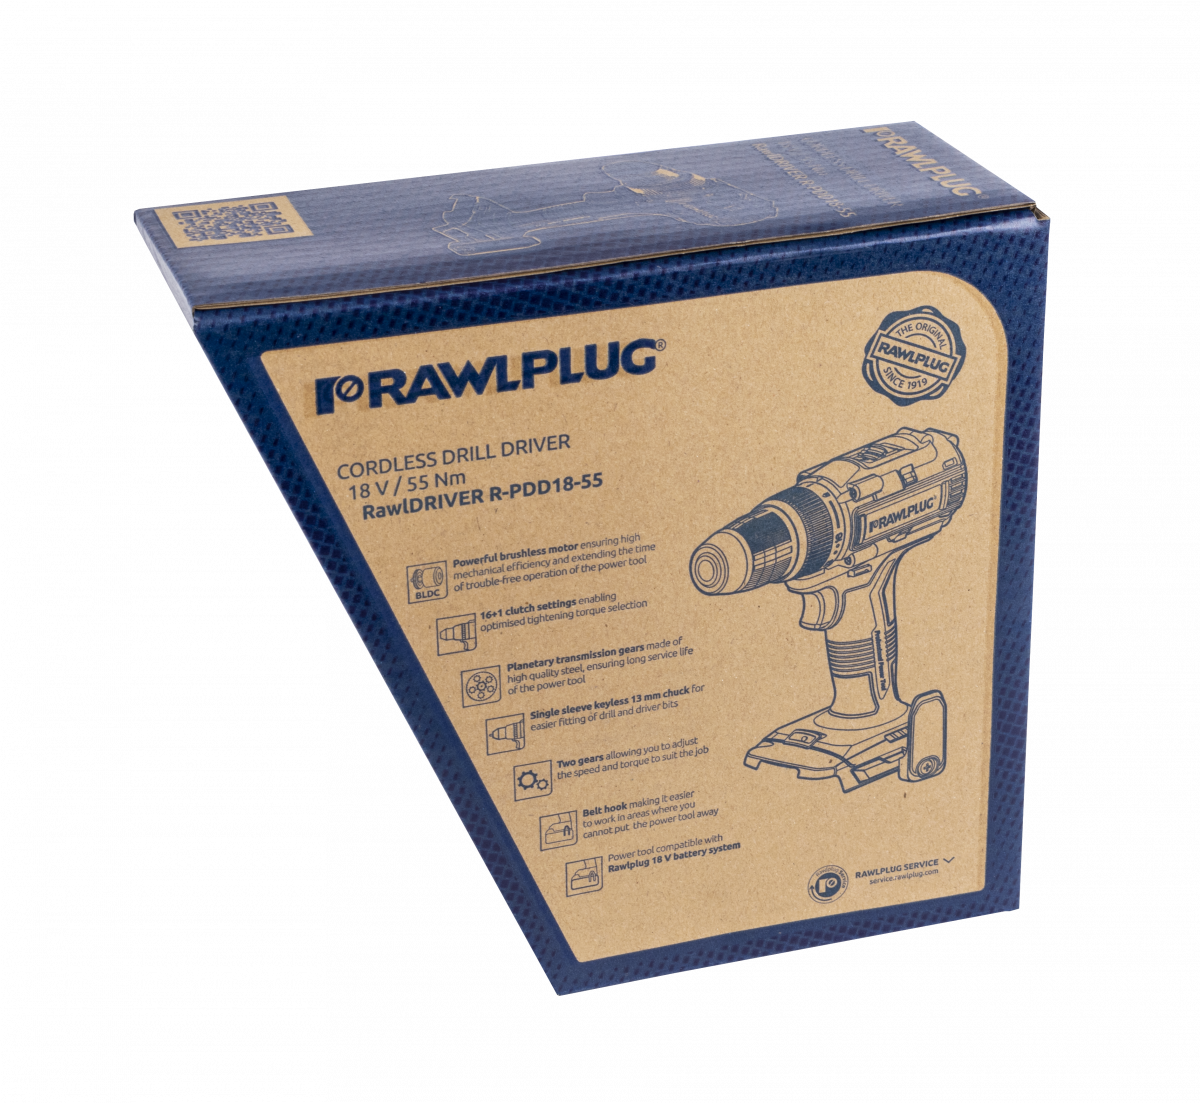 R-PDD18-55-XS RawlDriver 18V cordless drill / driver, in carton box